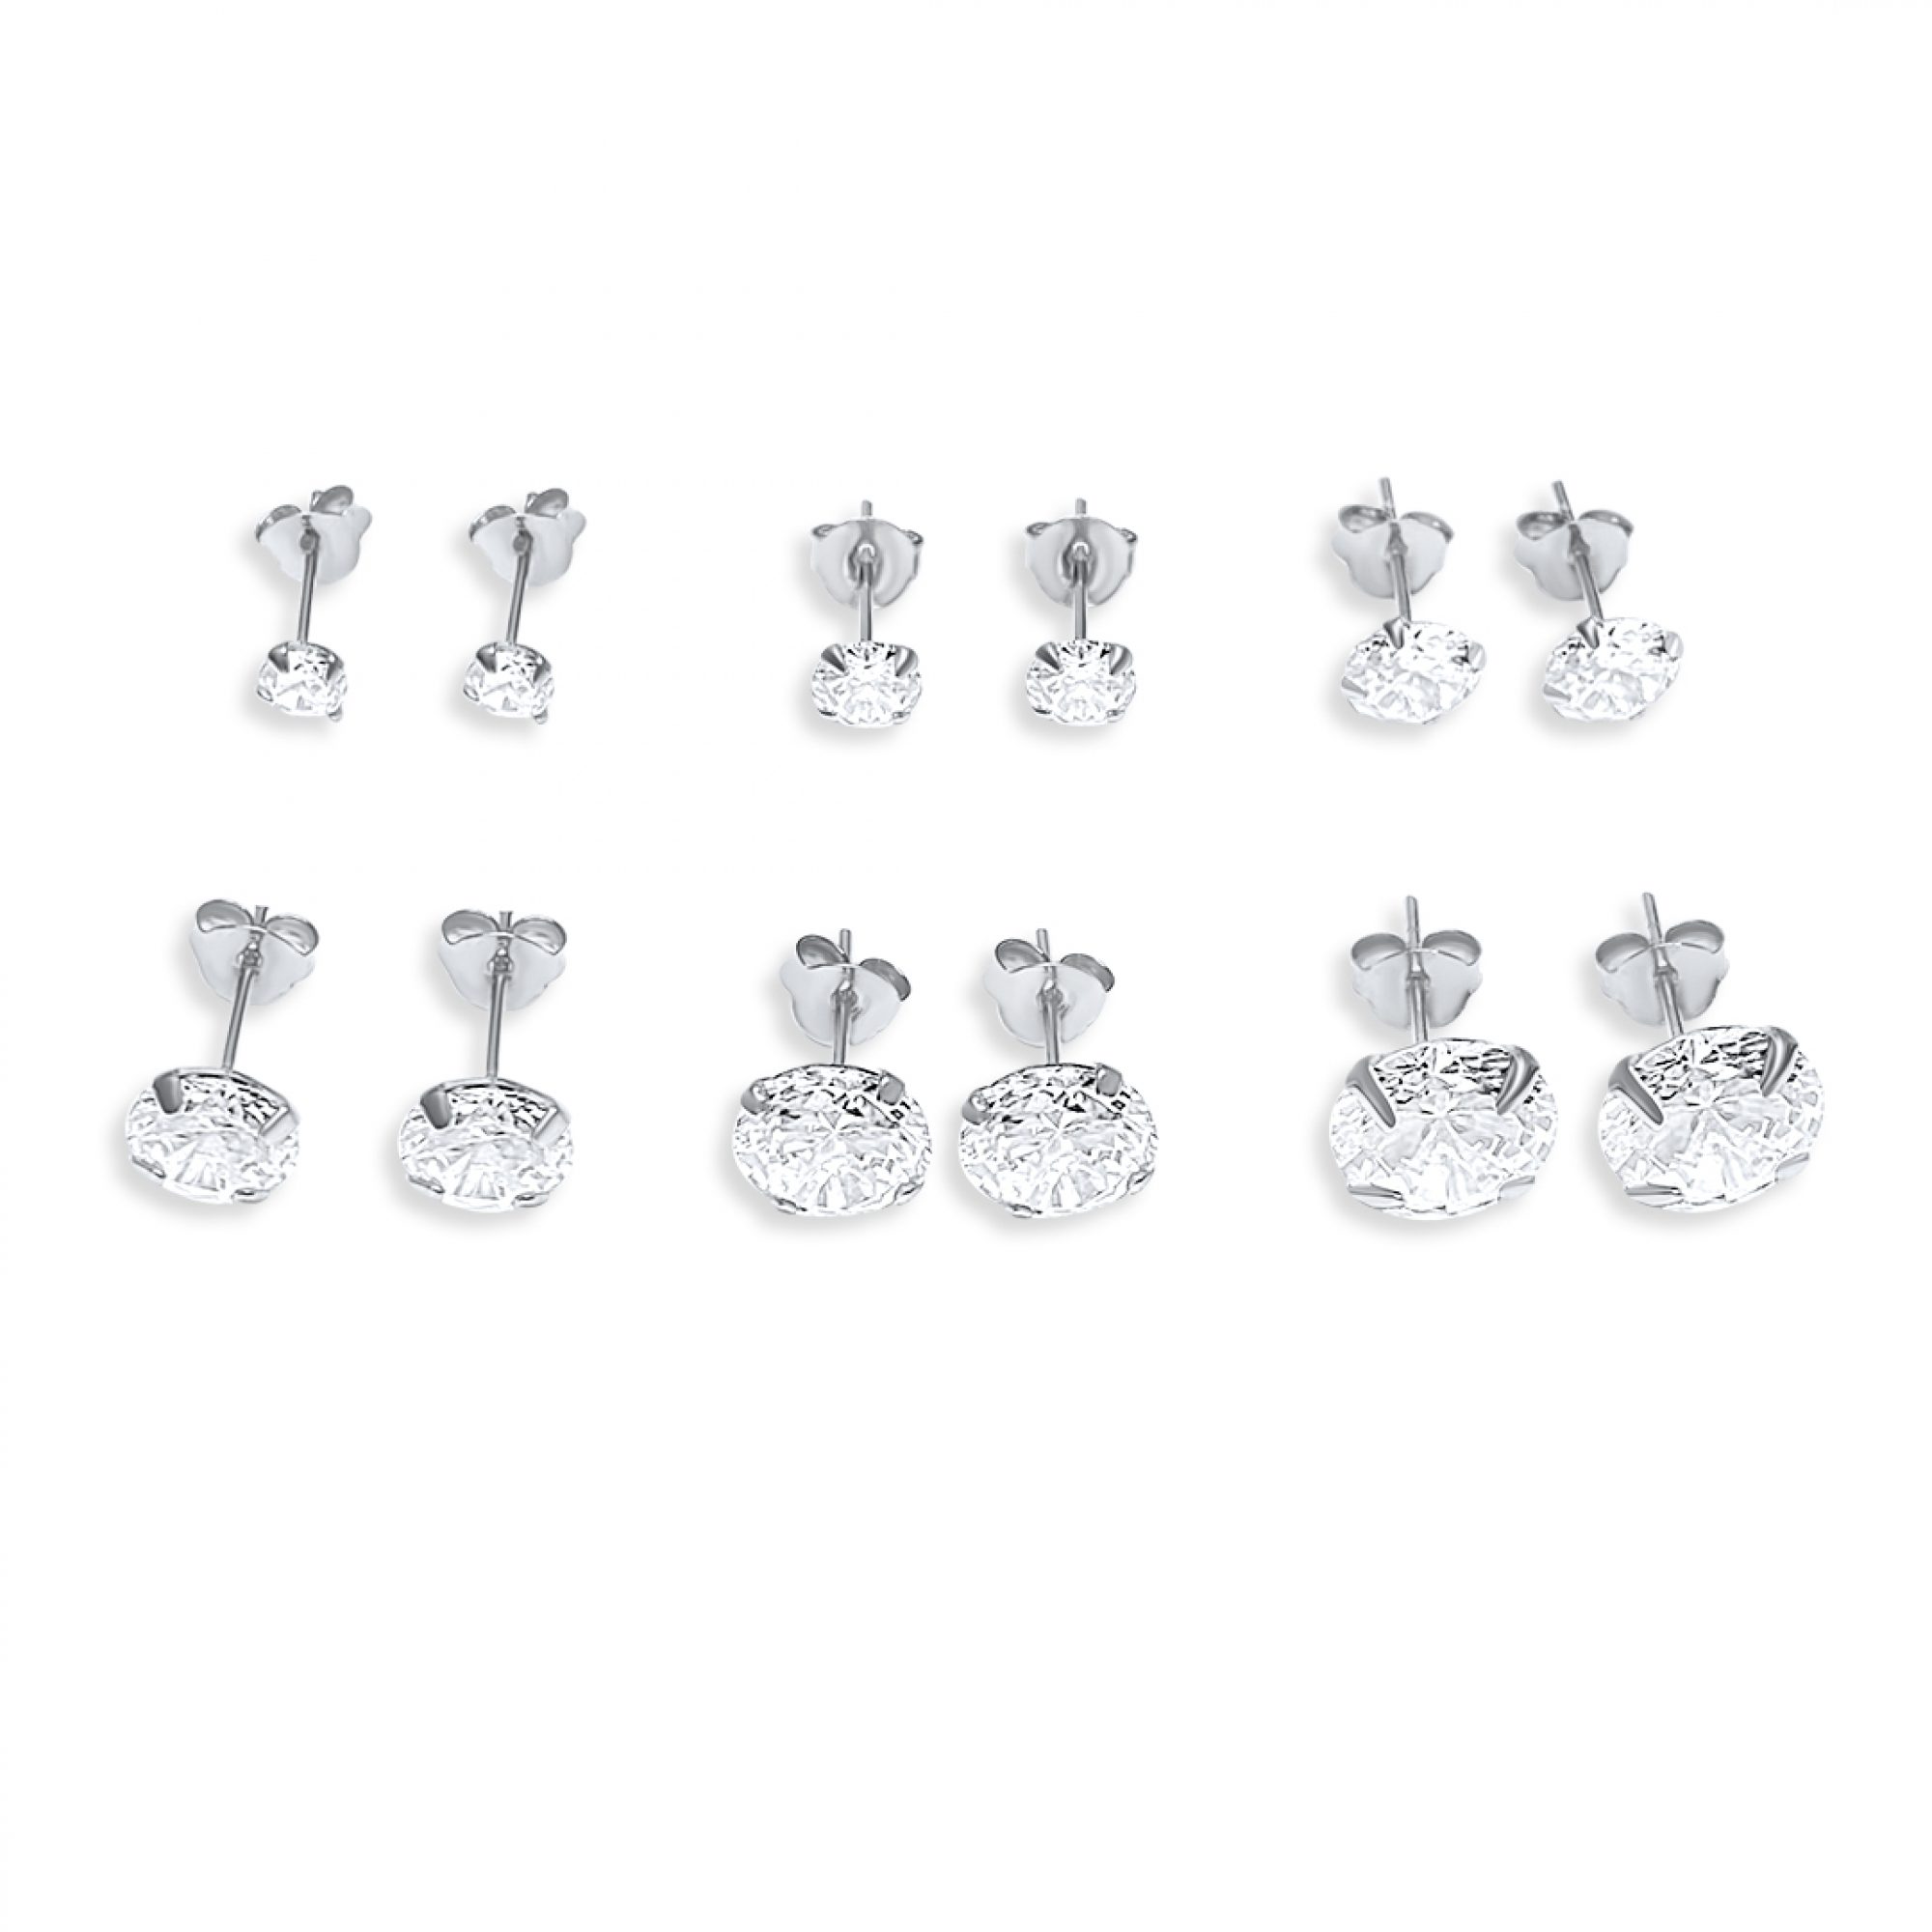 Silver stud earrings with zircon stones